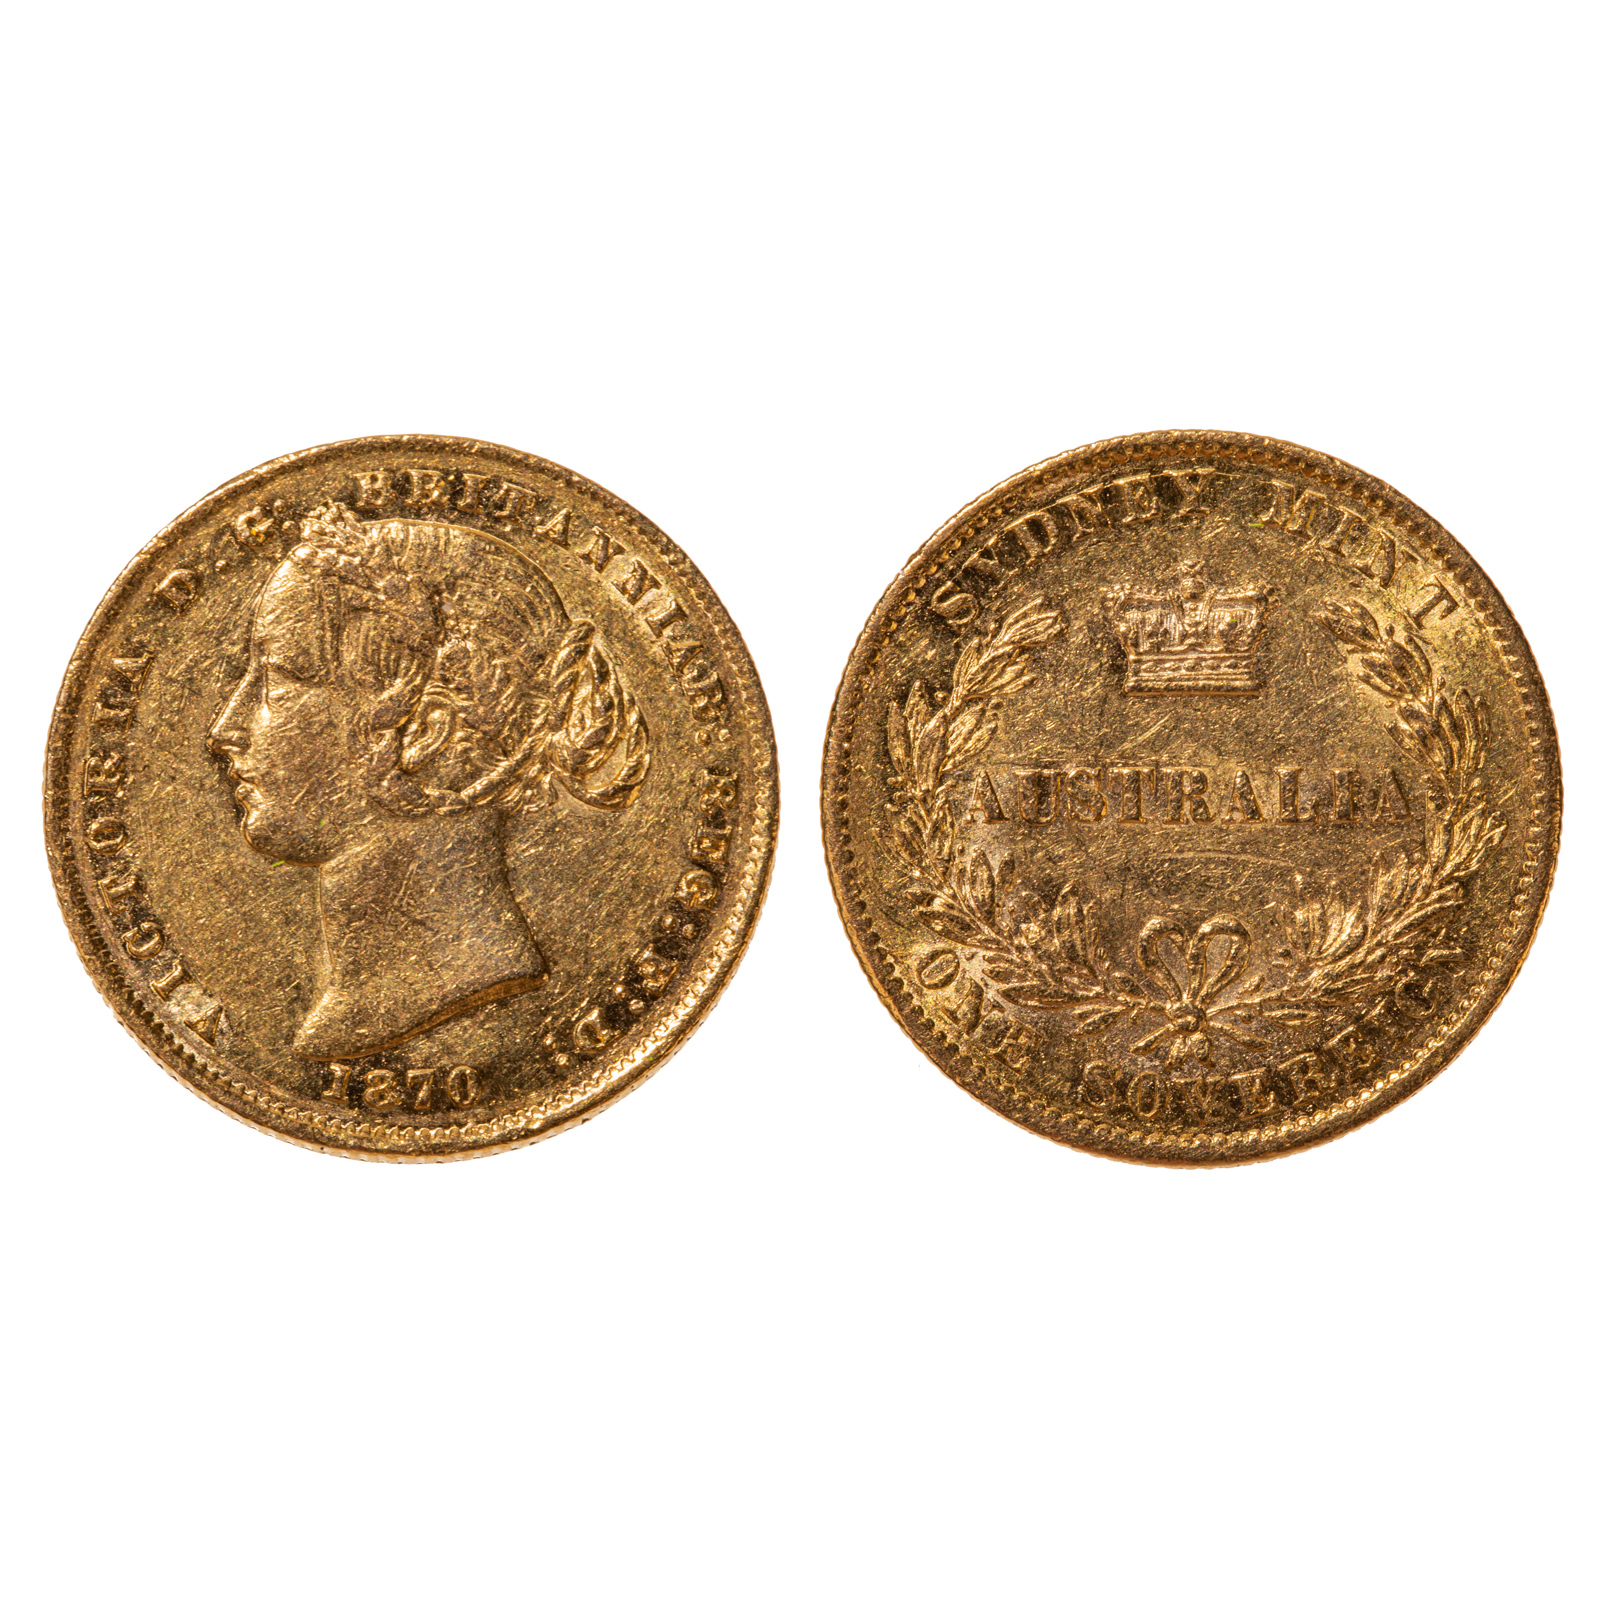 1870 AUSTRALIA GOLD SOVEREIGN AU